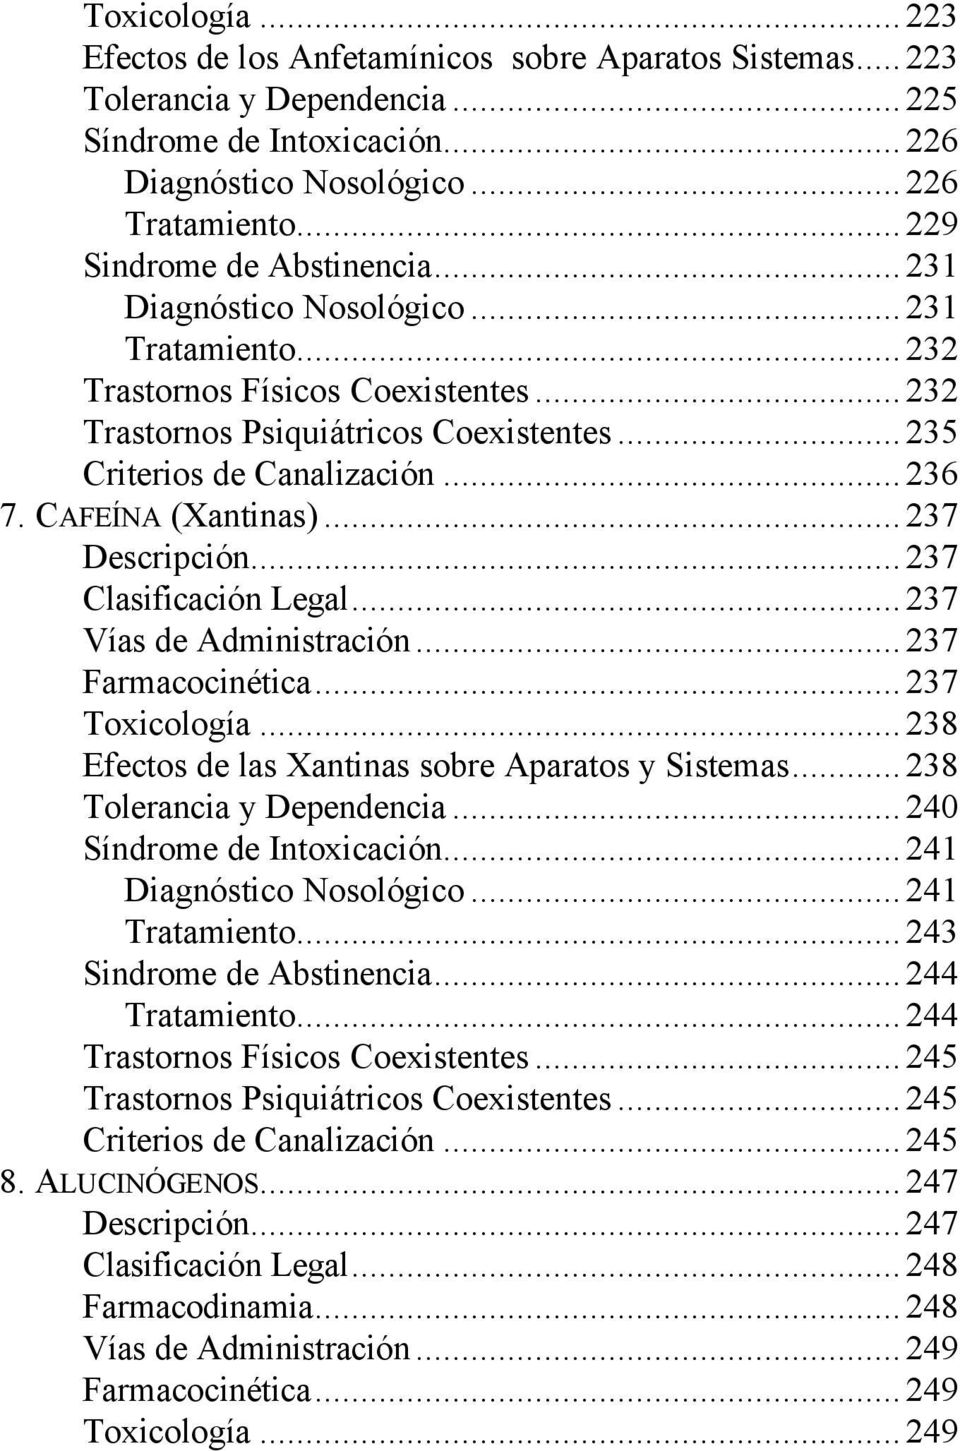 CAFEÍNA (Xantinas)...237 Descripción...237 Clasificación Legal...237 Vías de Administración...237 Farmacocinética...237 Toxicología...238 Efectos de las Xantinas sobre Aparatos y Sistemas.